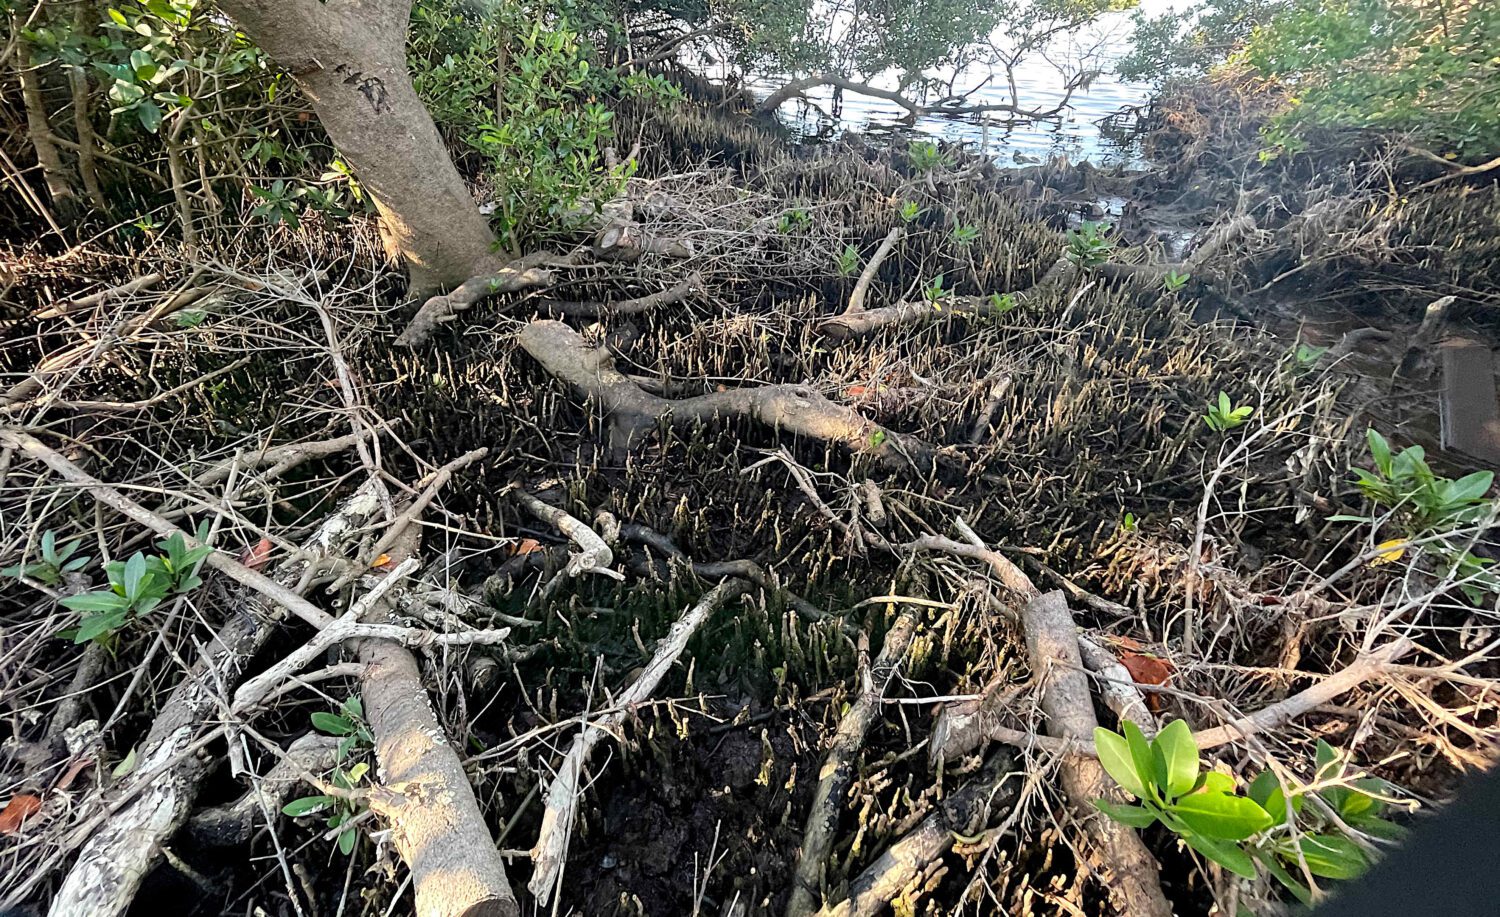 Aqua mangrove trimming prompts FDEP warning